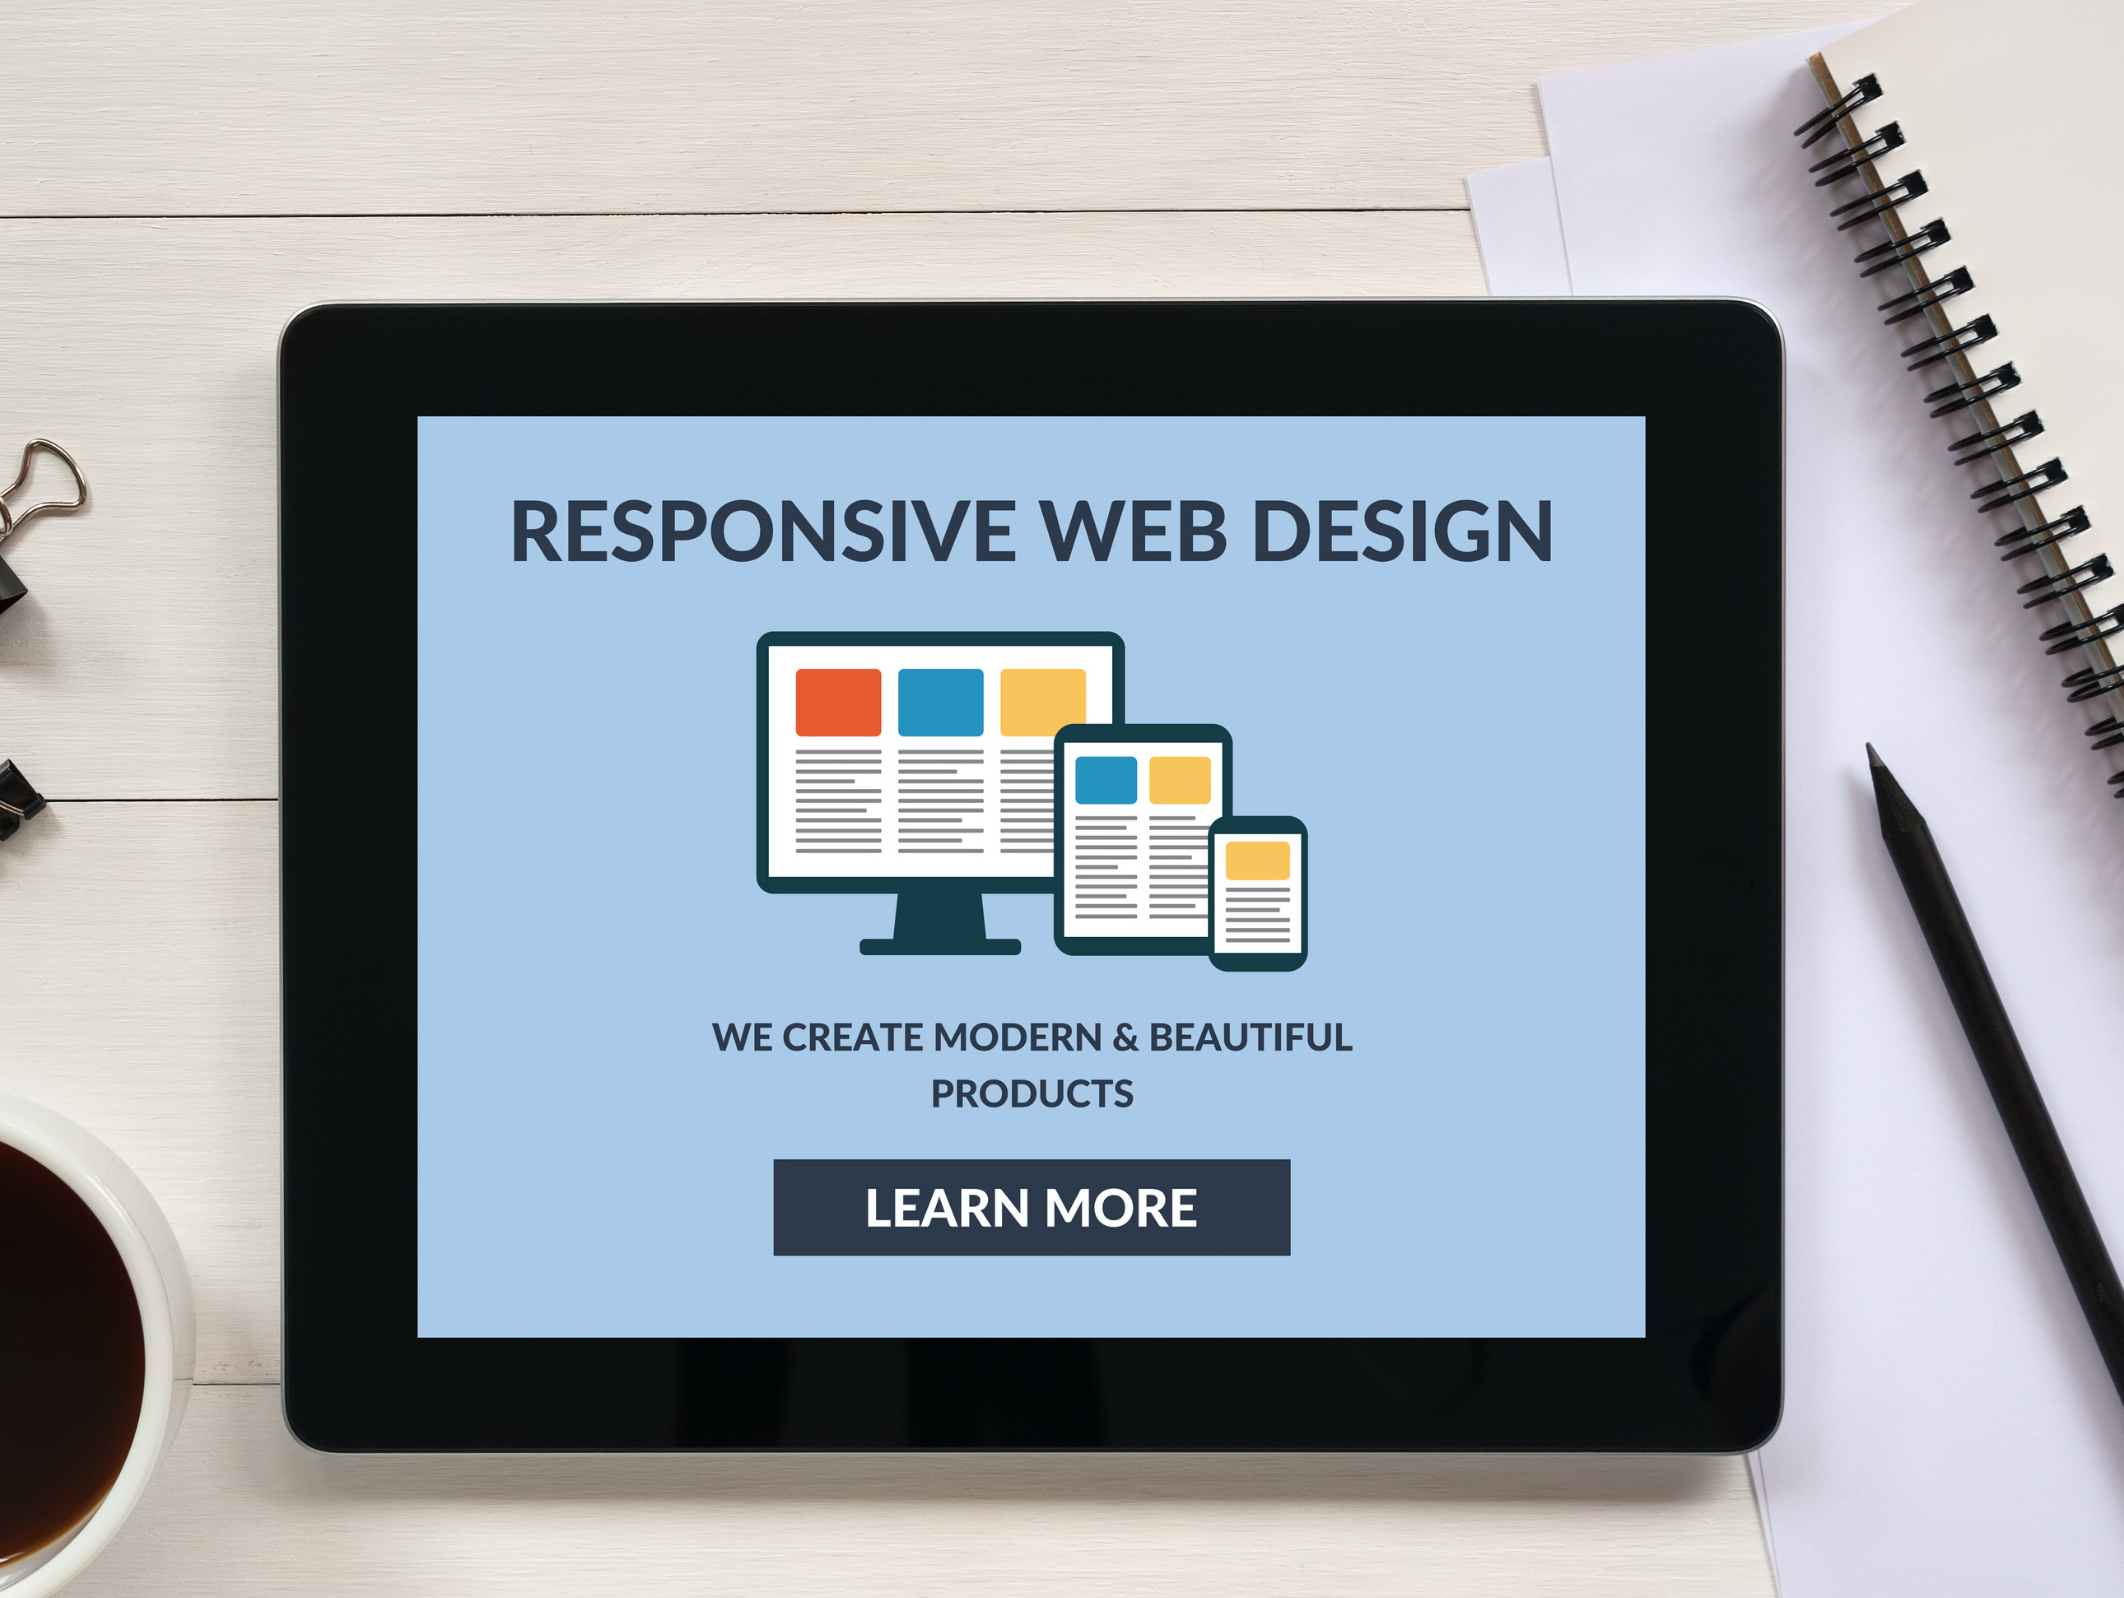 Responsive Web Design Blog Cover Image